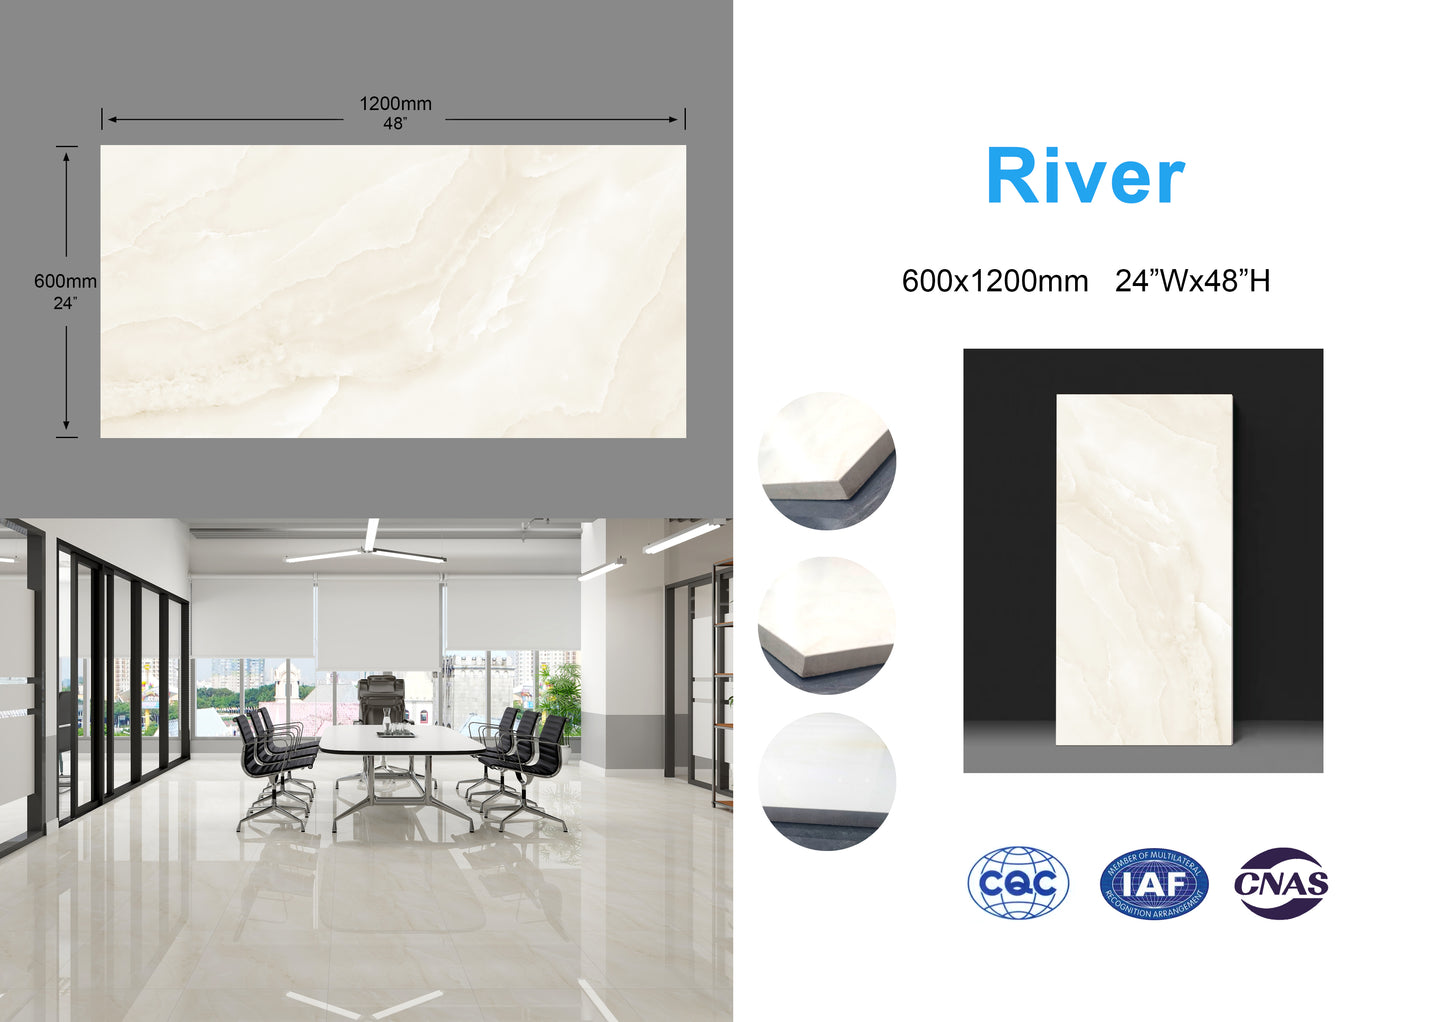 River family Full Polished Glazed Tile 24"x48" 3pcs/box 24sf/box $1.59/sf (15 days return/exchange) Bulk Deal 1000sf+ $1.39/SF(No return/no exchange)